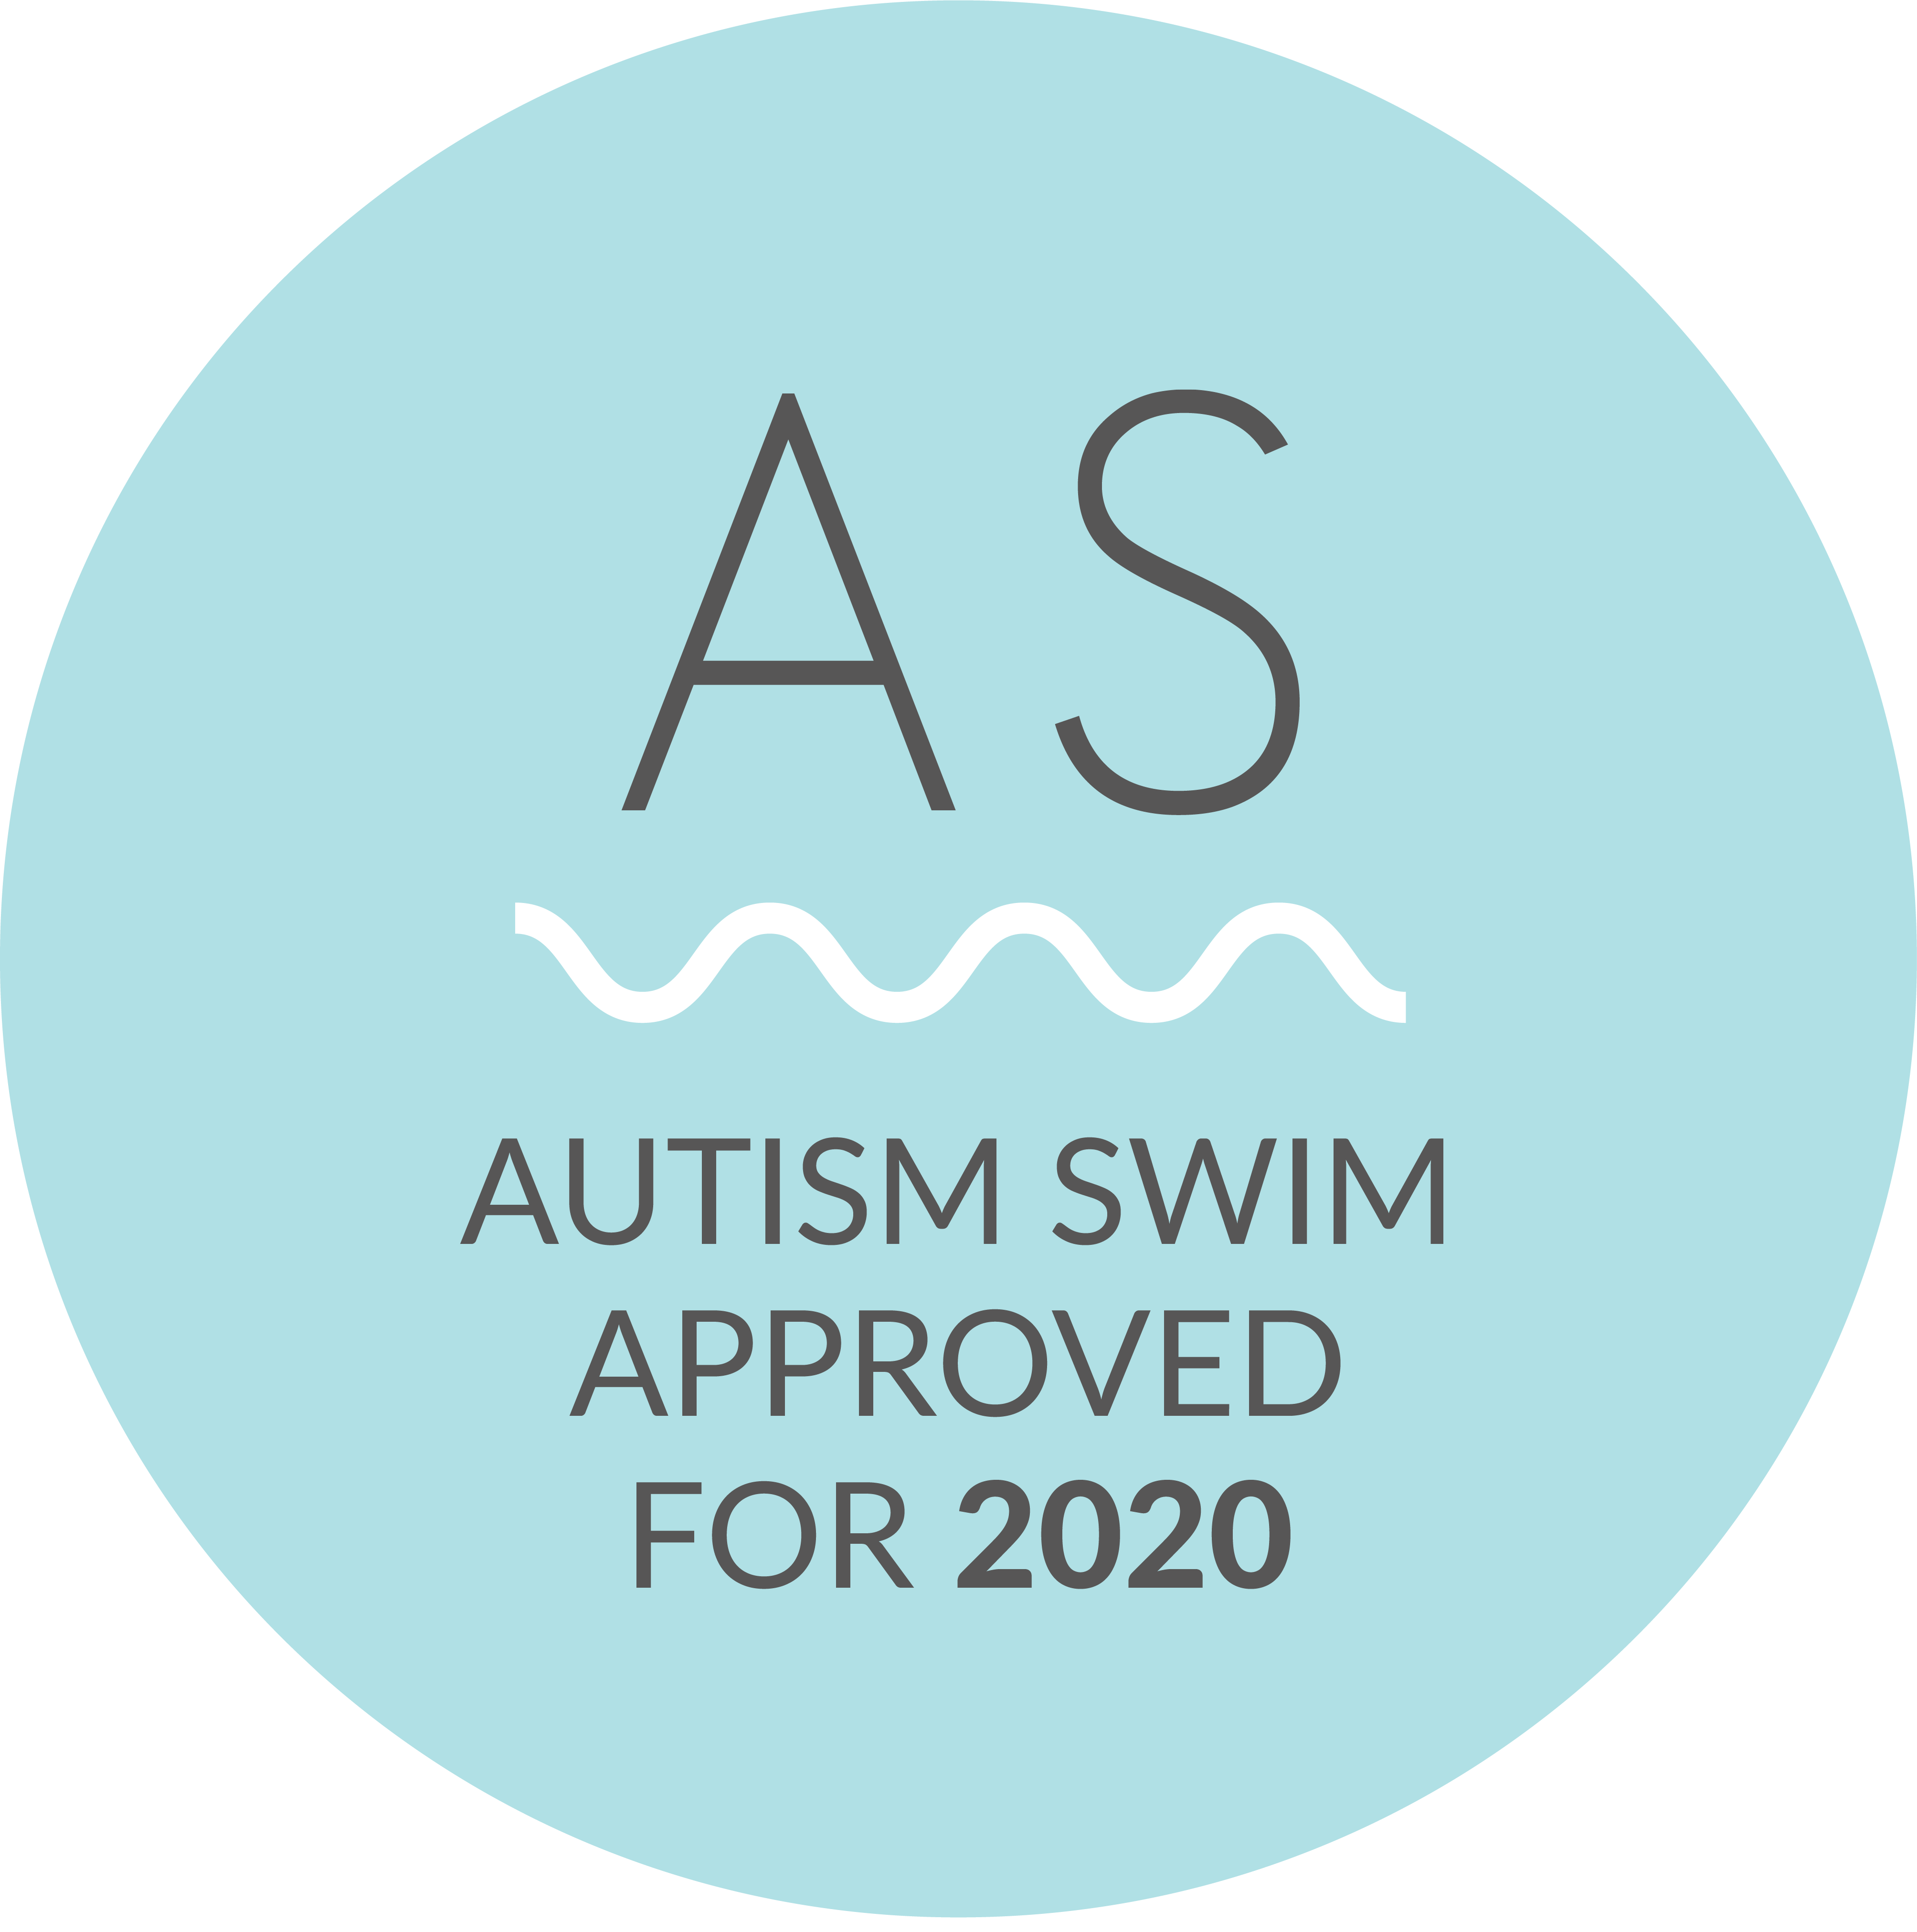 Autism swim logo